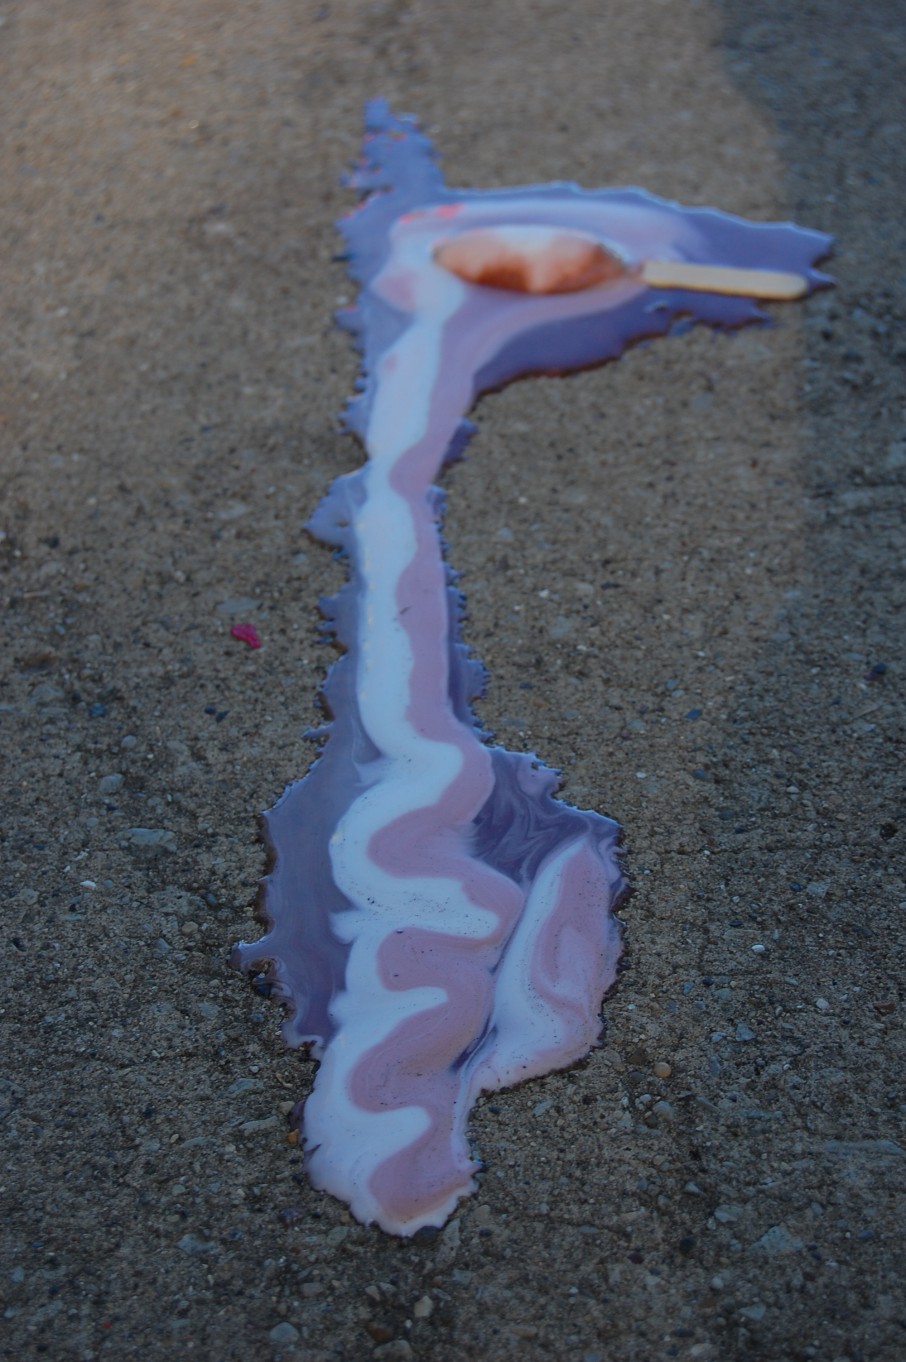 Ice cream melting on pavement